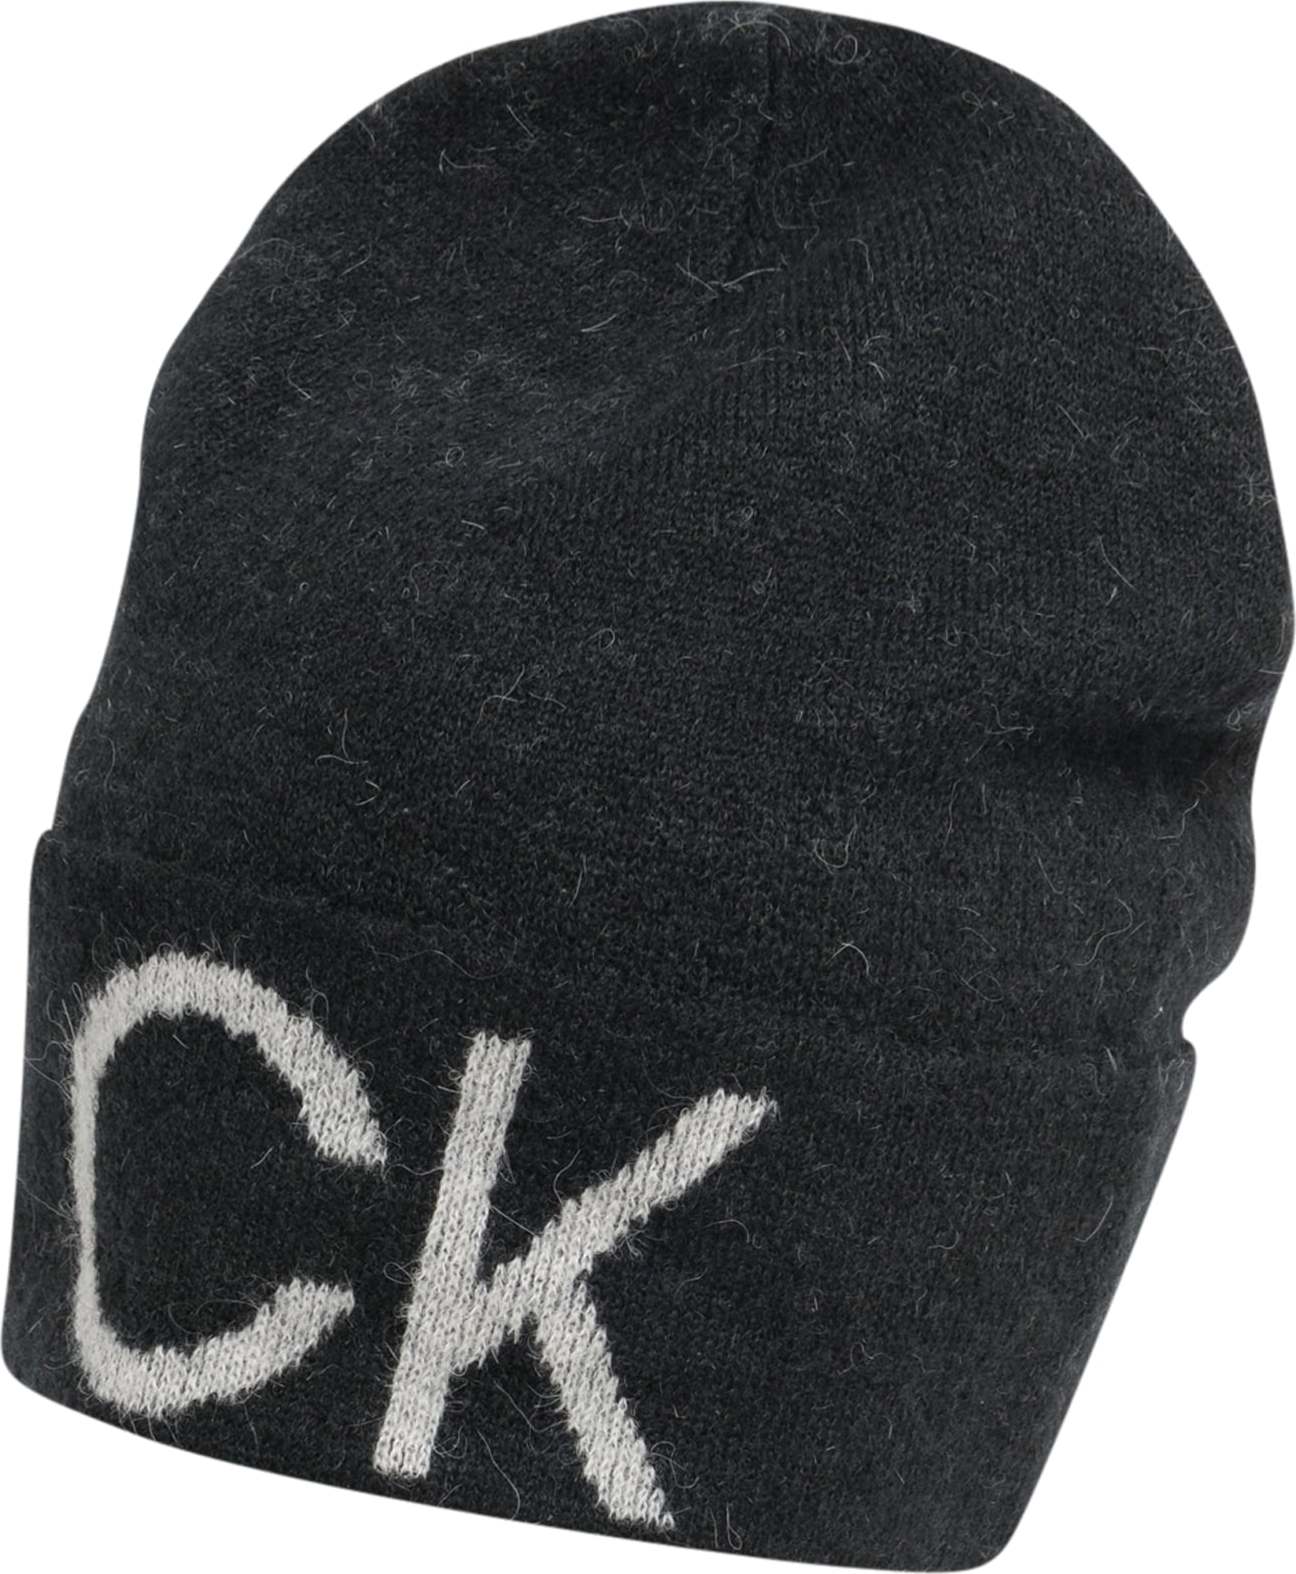 Calvin Klein Čepice černá / bílá